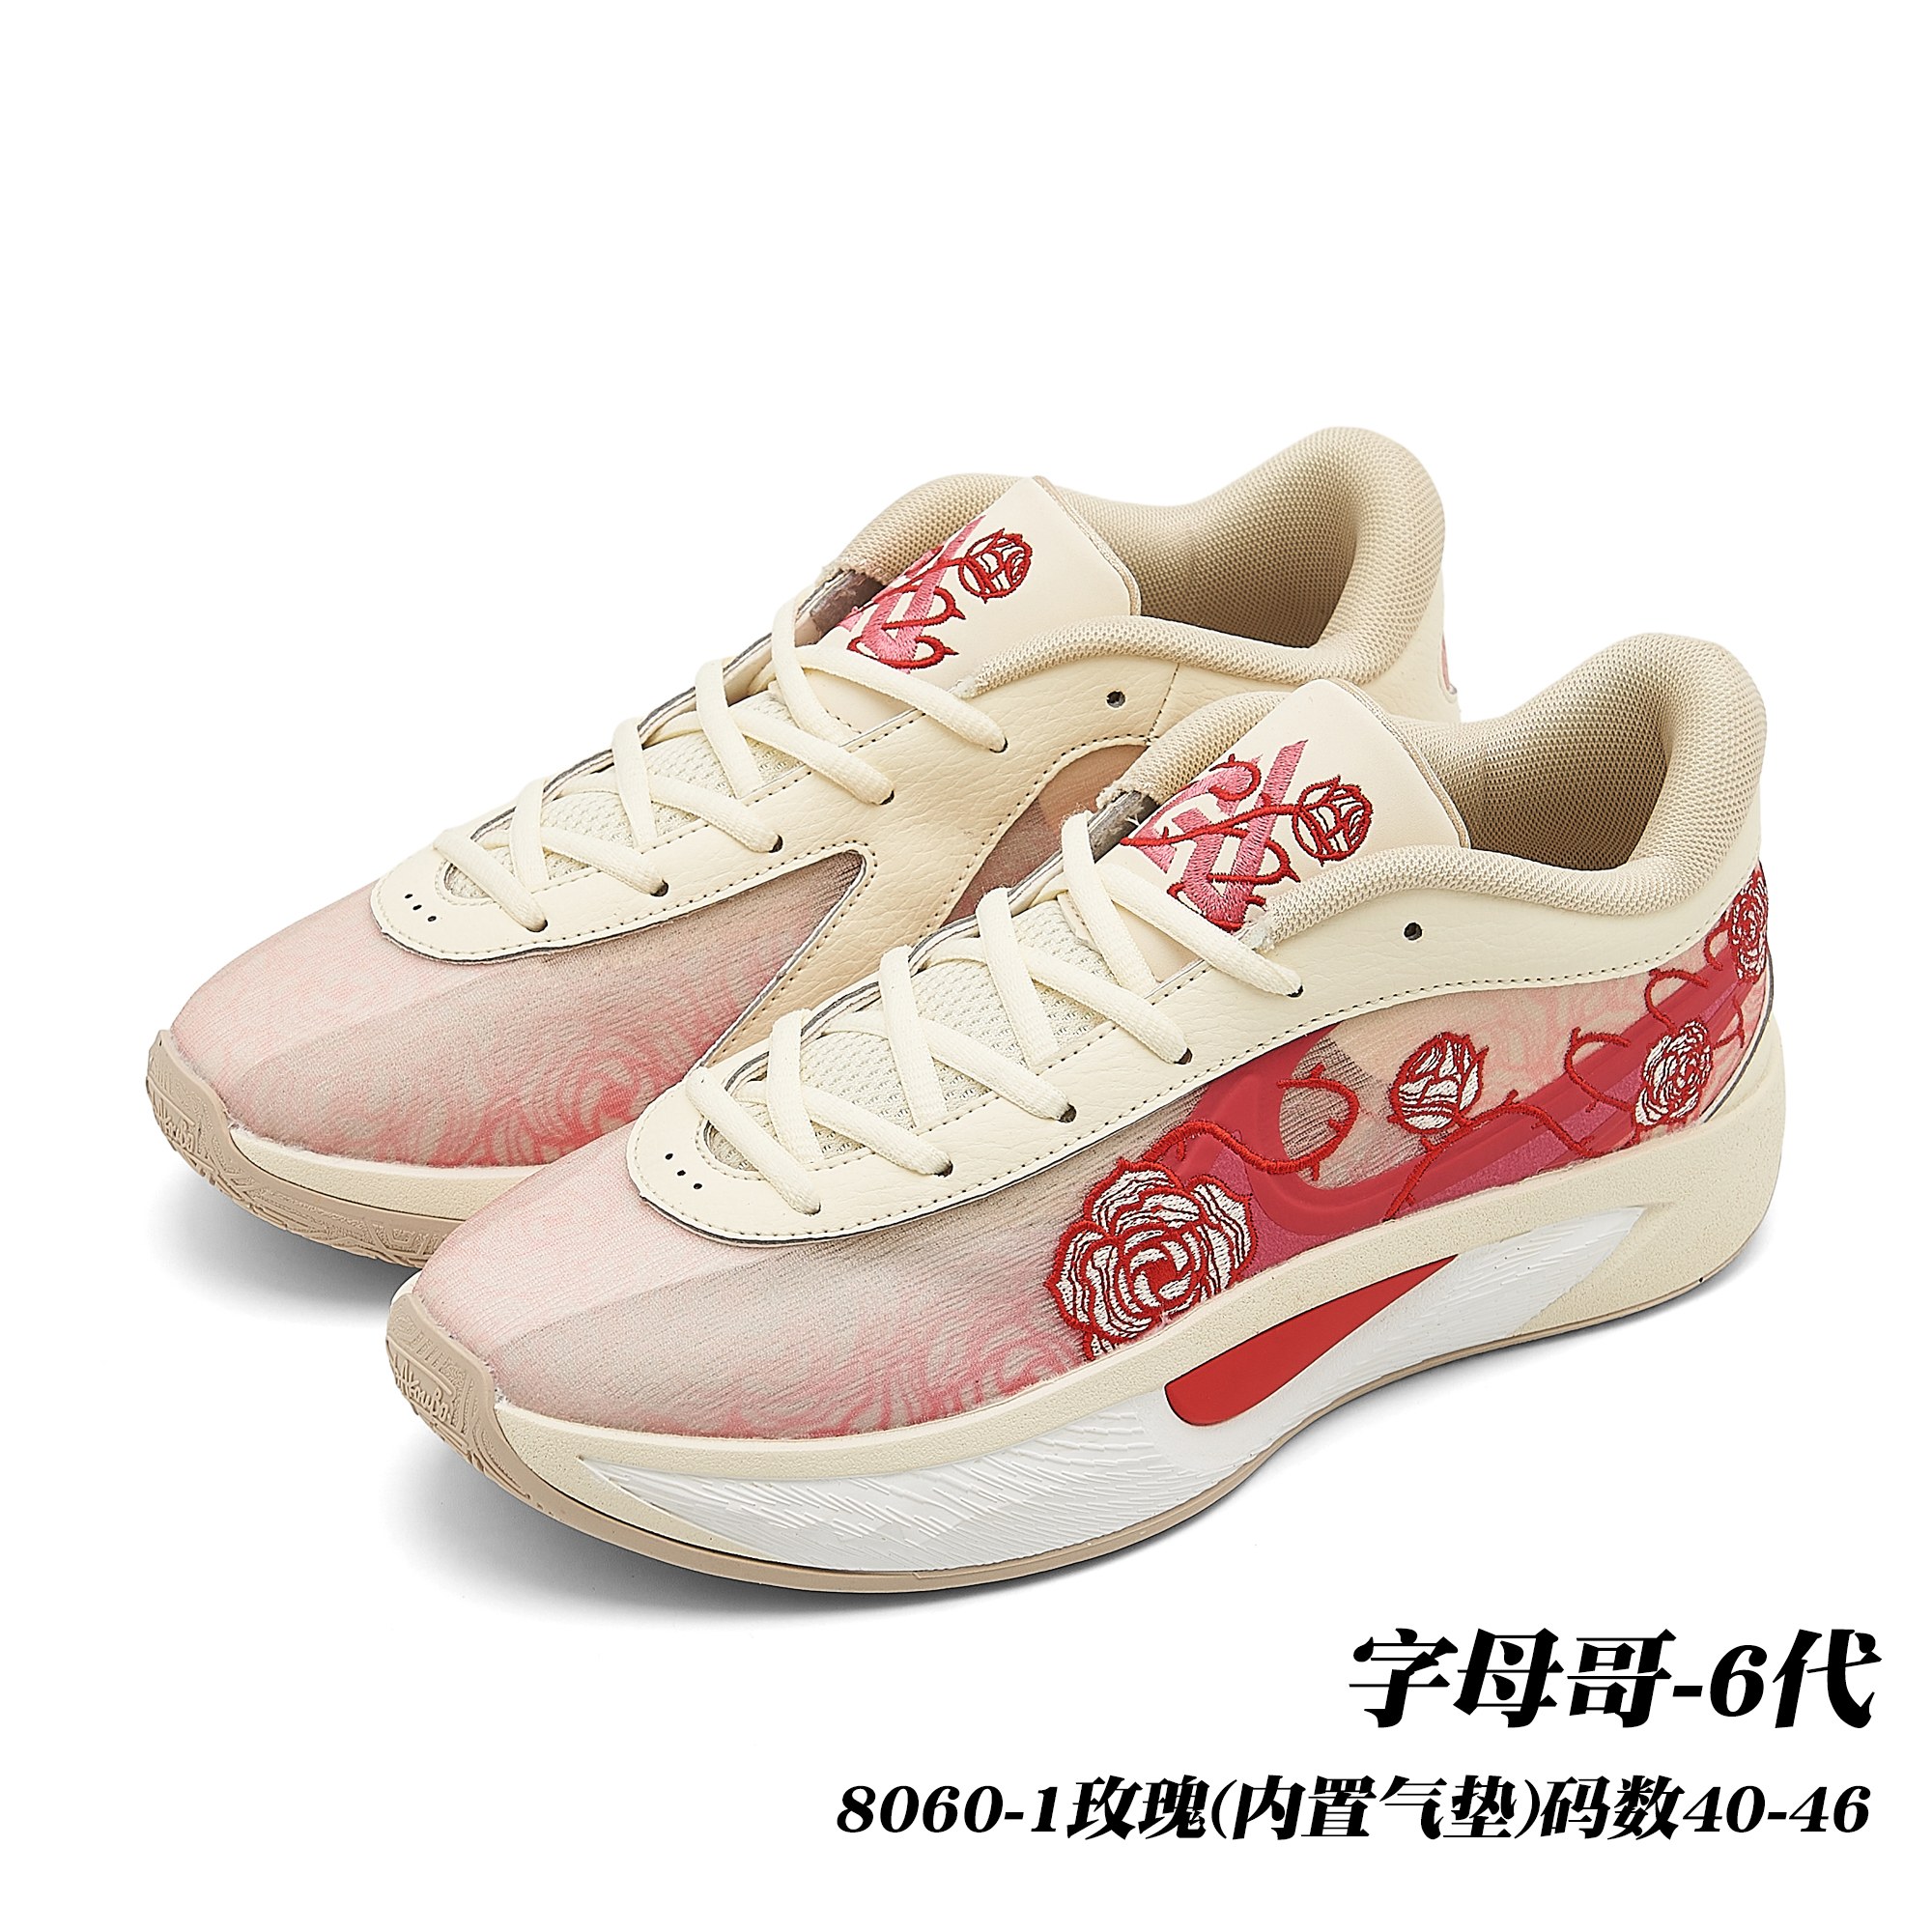 Nike Sapatos Tênis China online
 Casual